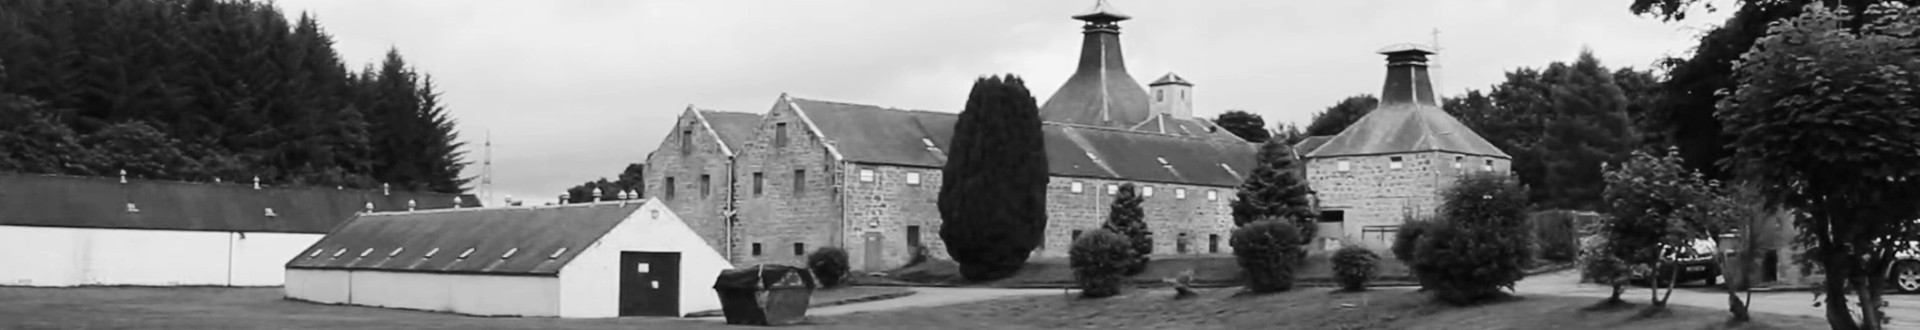 Coleburn Distillery